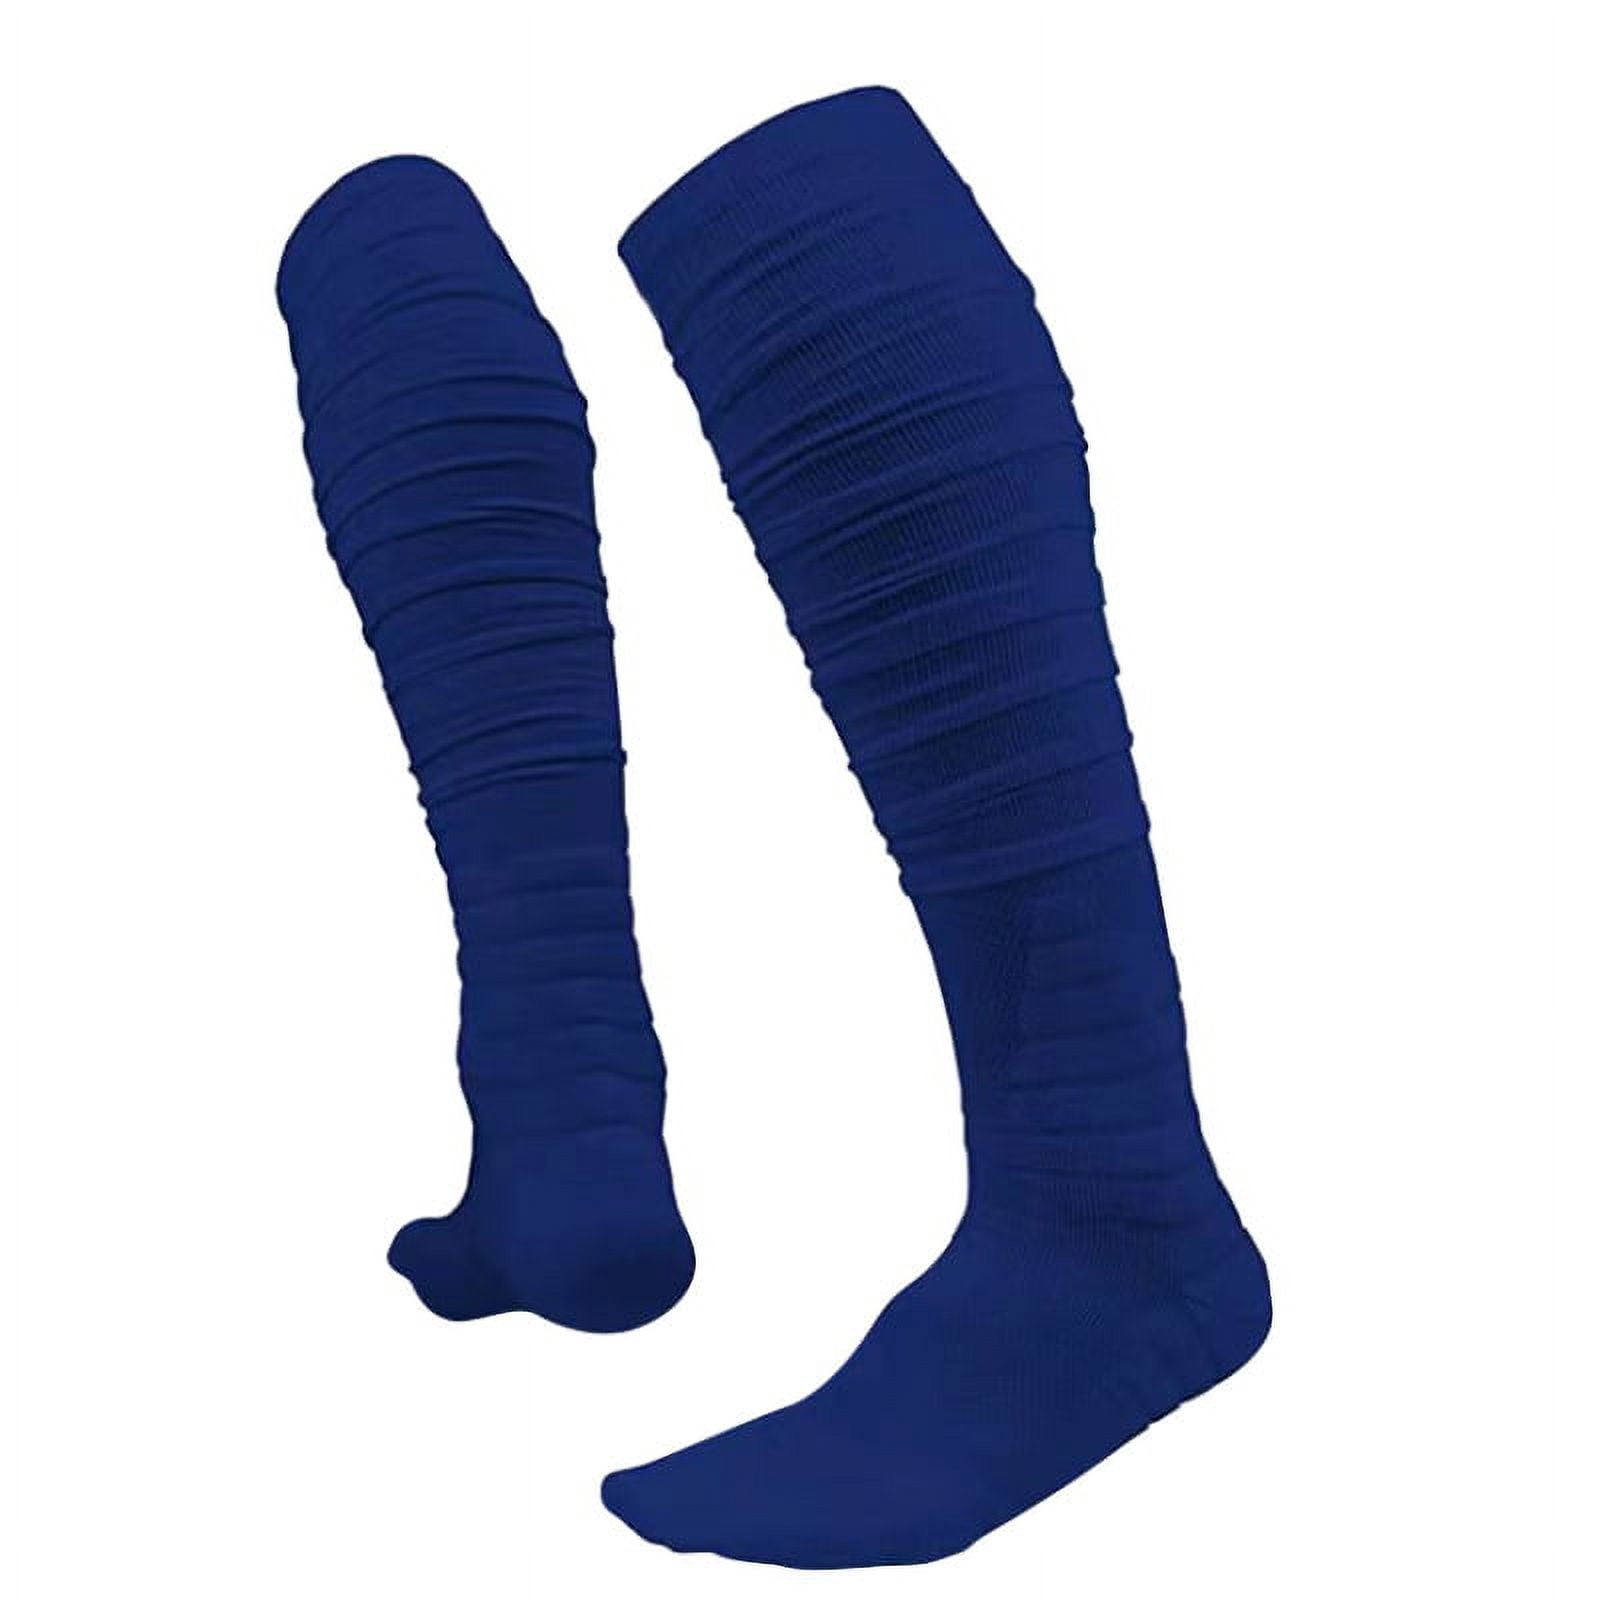 Non Slip Scrunch Football Socks, Football Socks Extra Long Socks